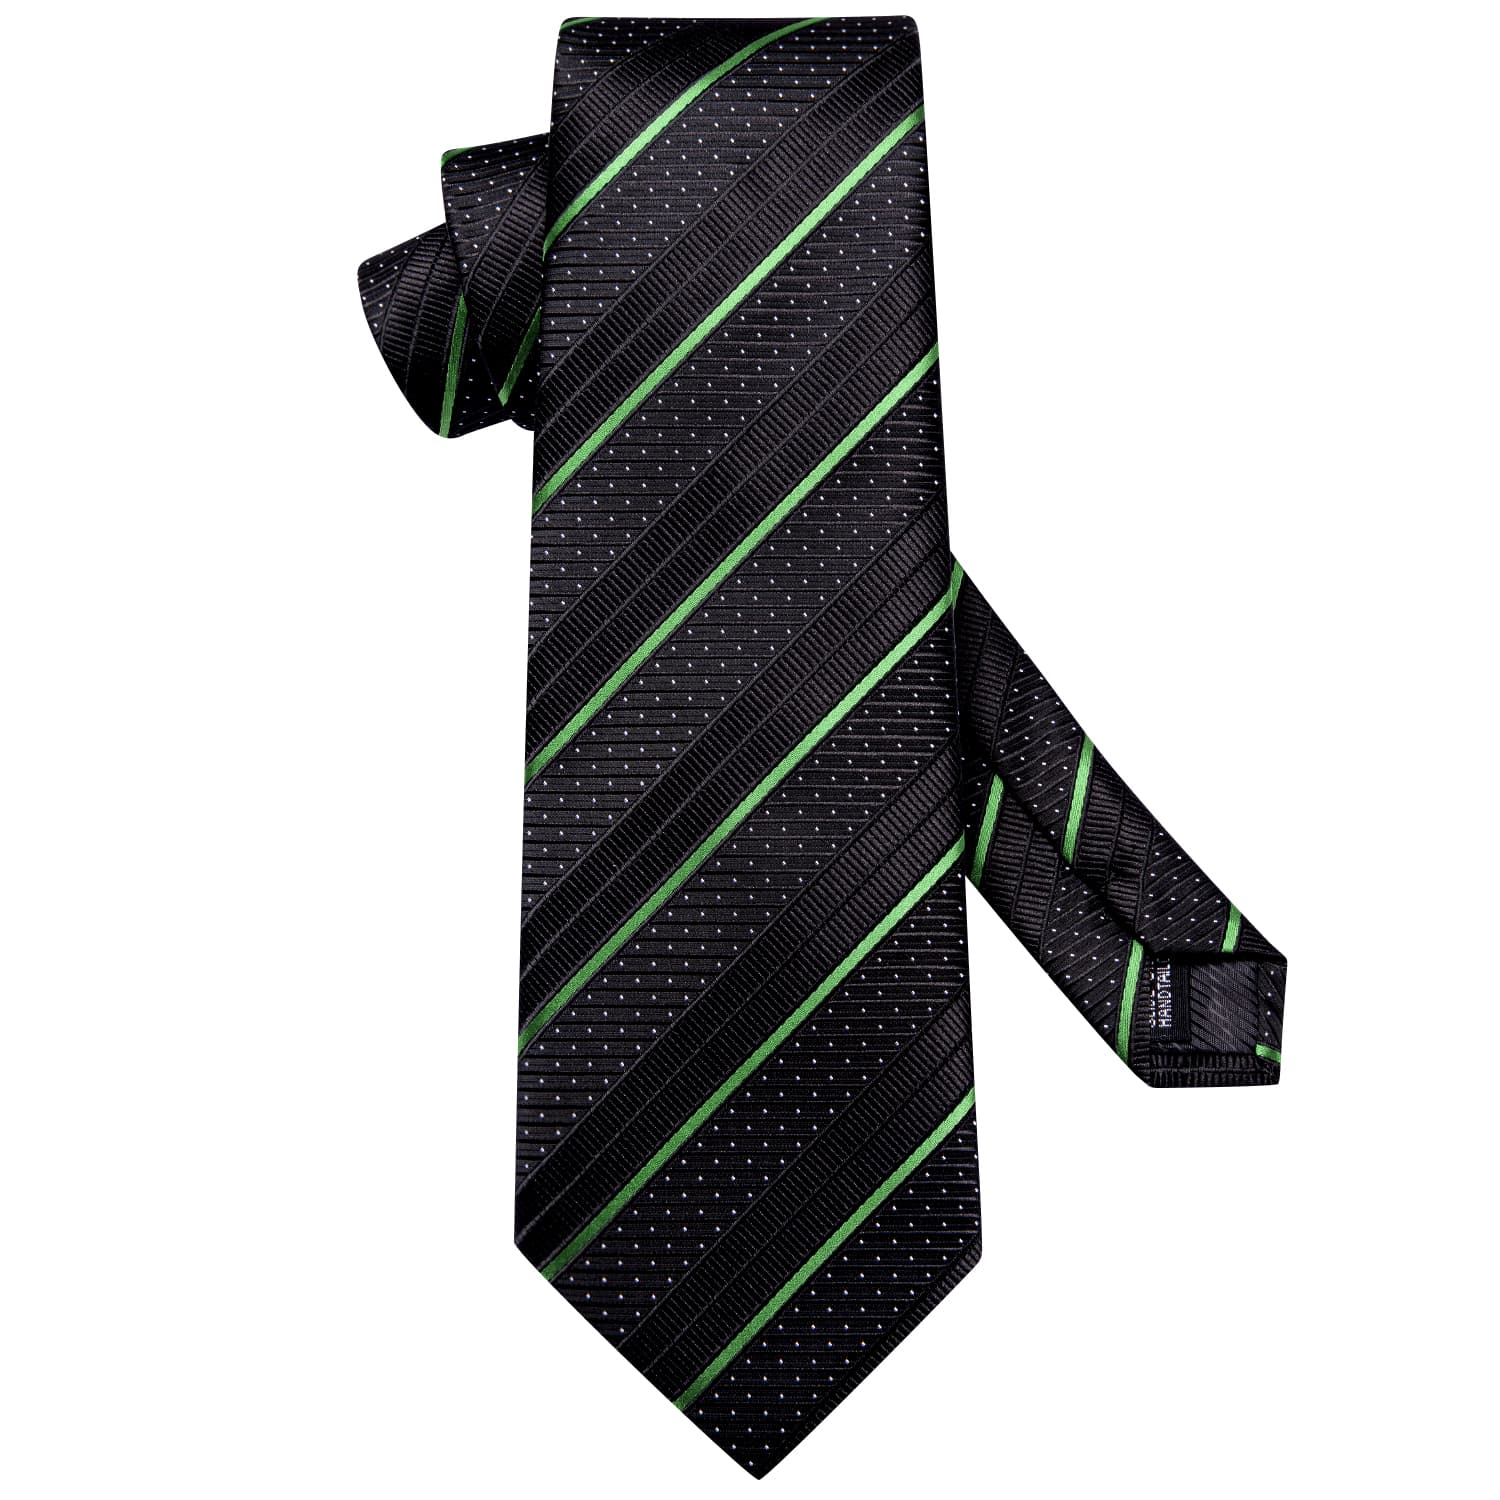  Black Tie Light Green Stripes White Dots Neck Tie Set for Men